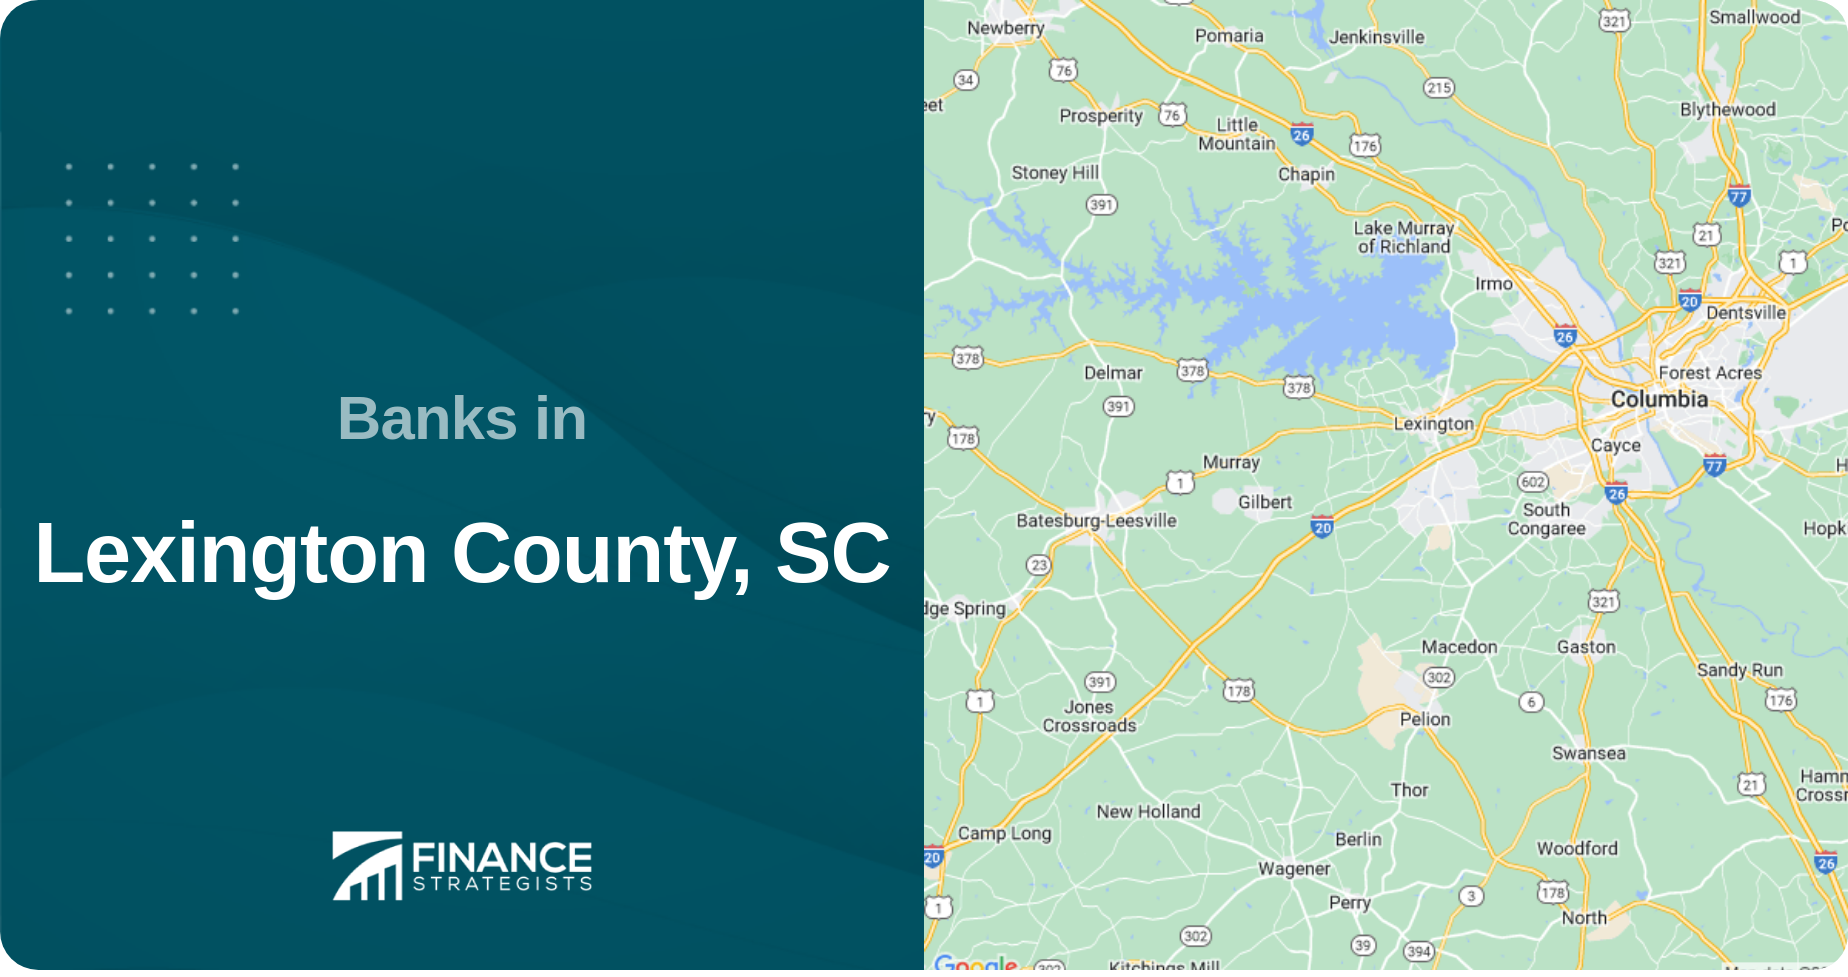 Banks in Lexington County, SC